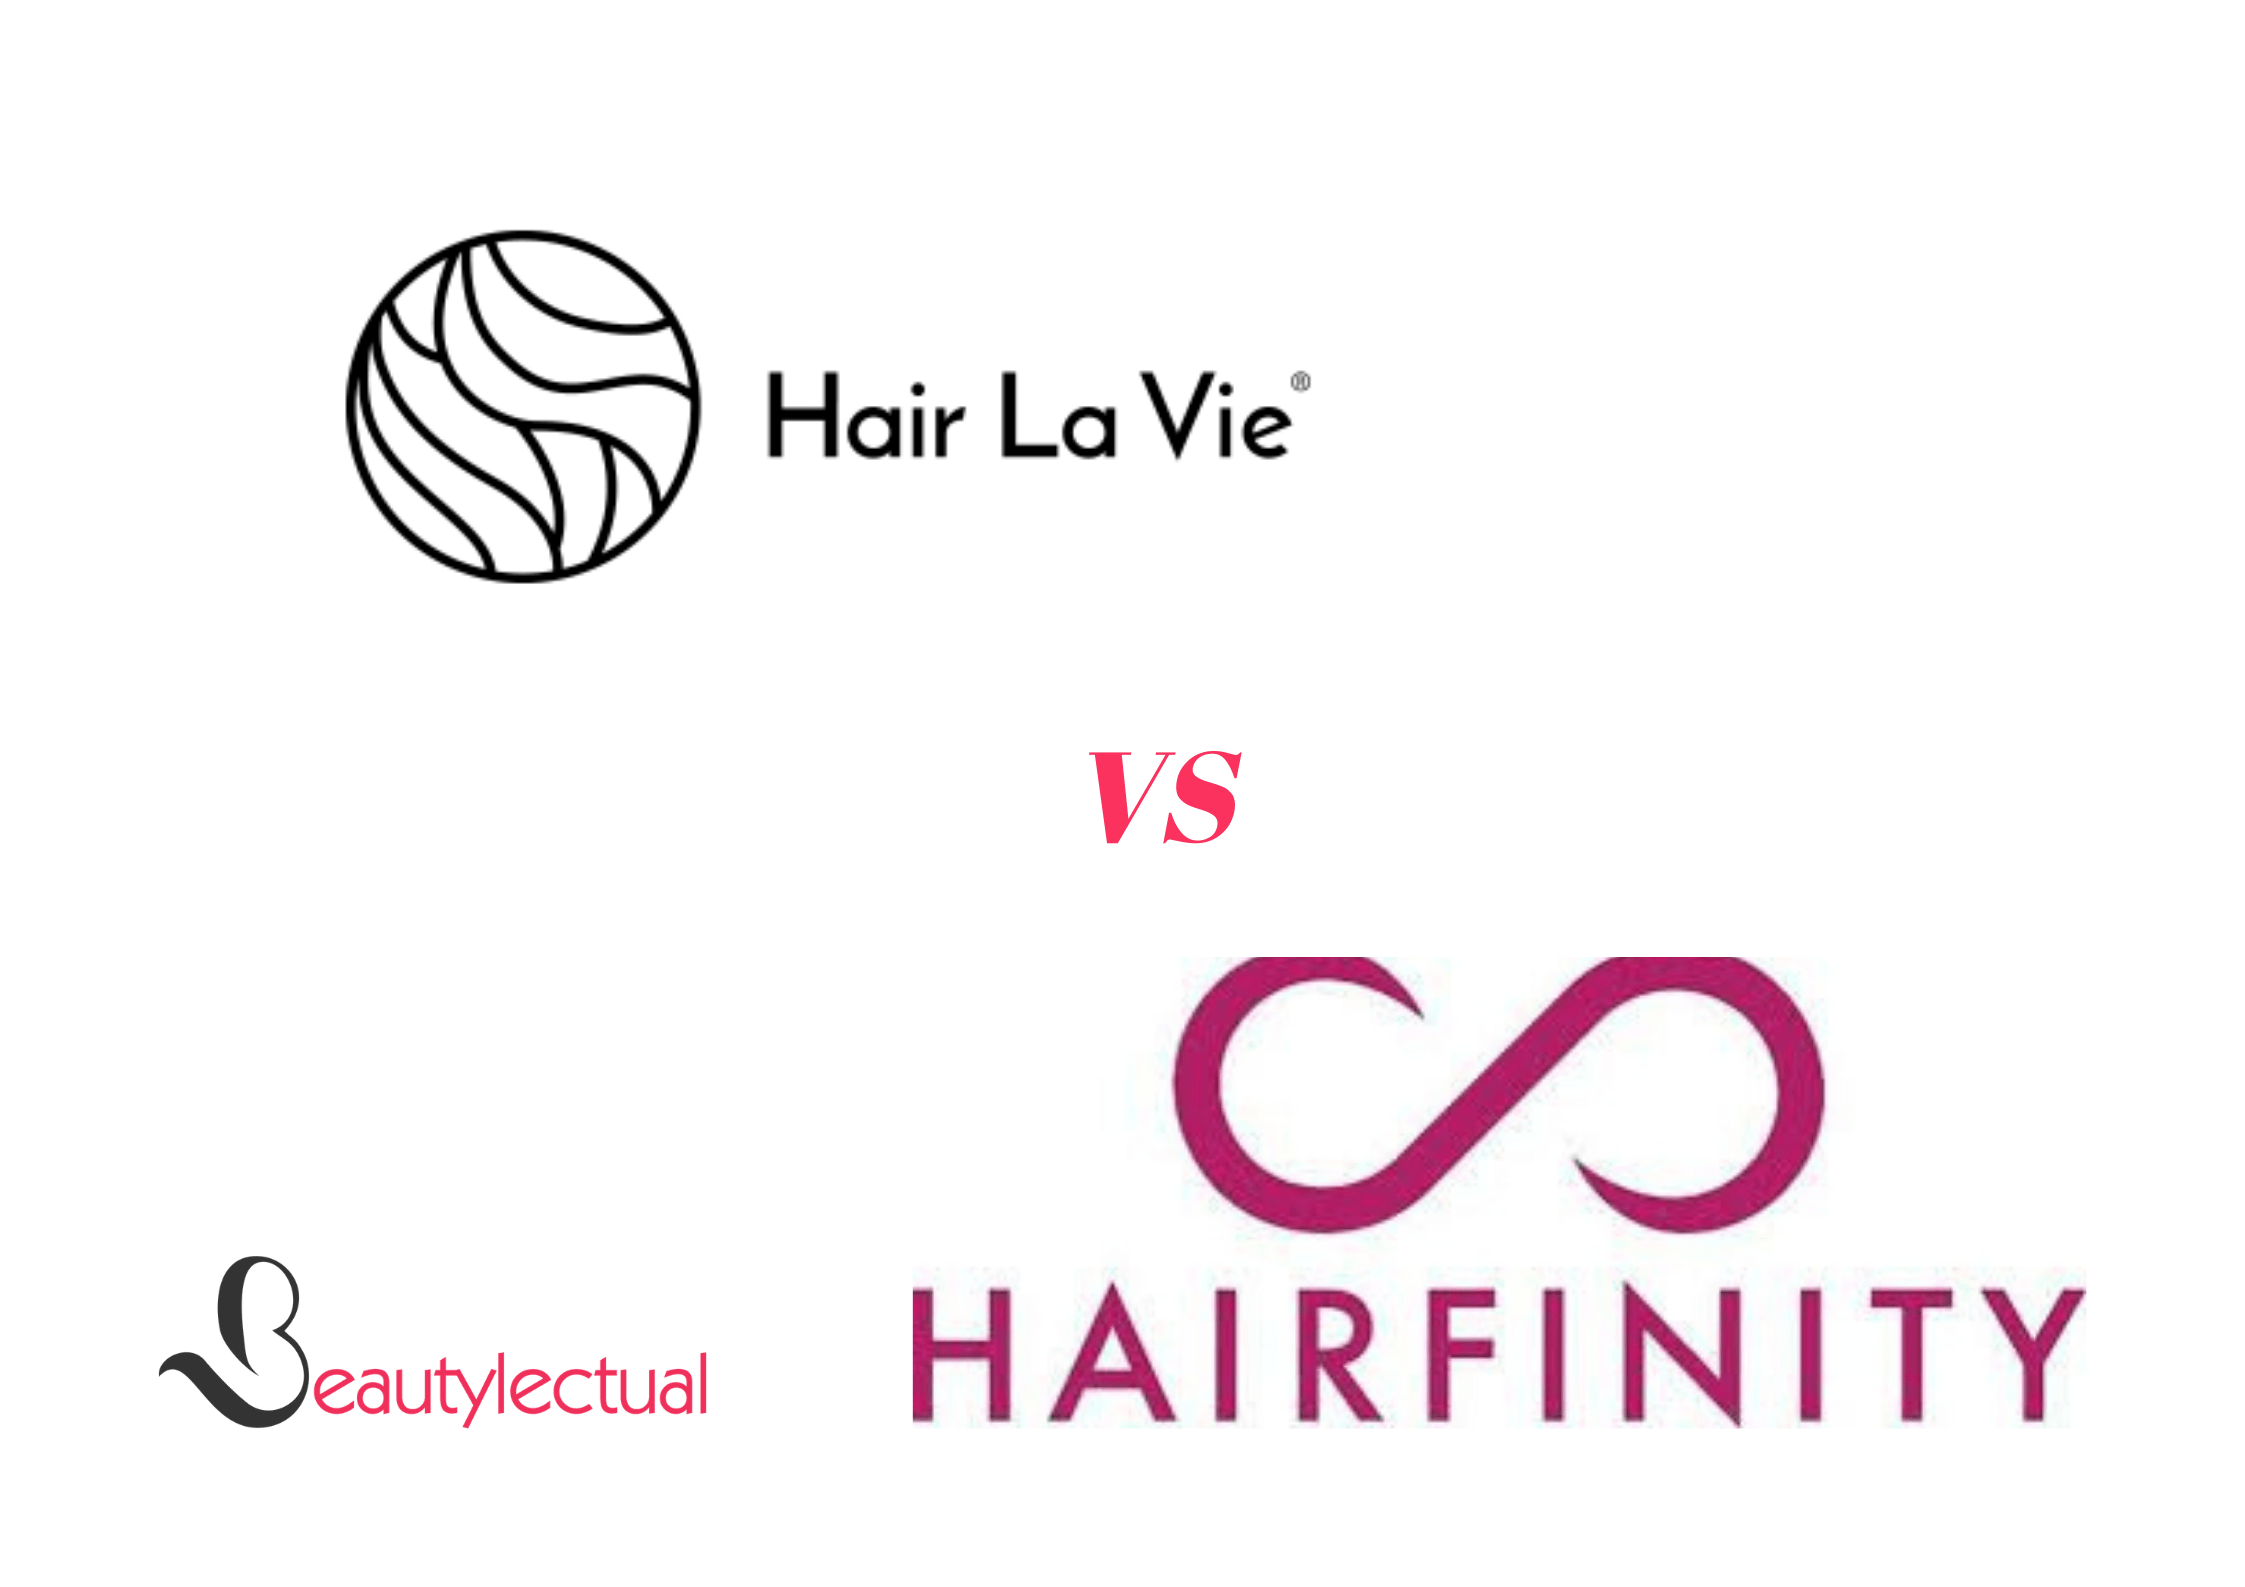 Hair La Vie VS Hairfinity